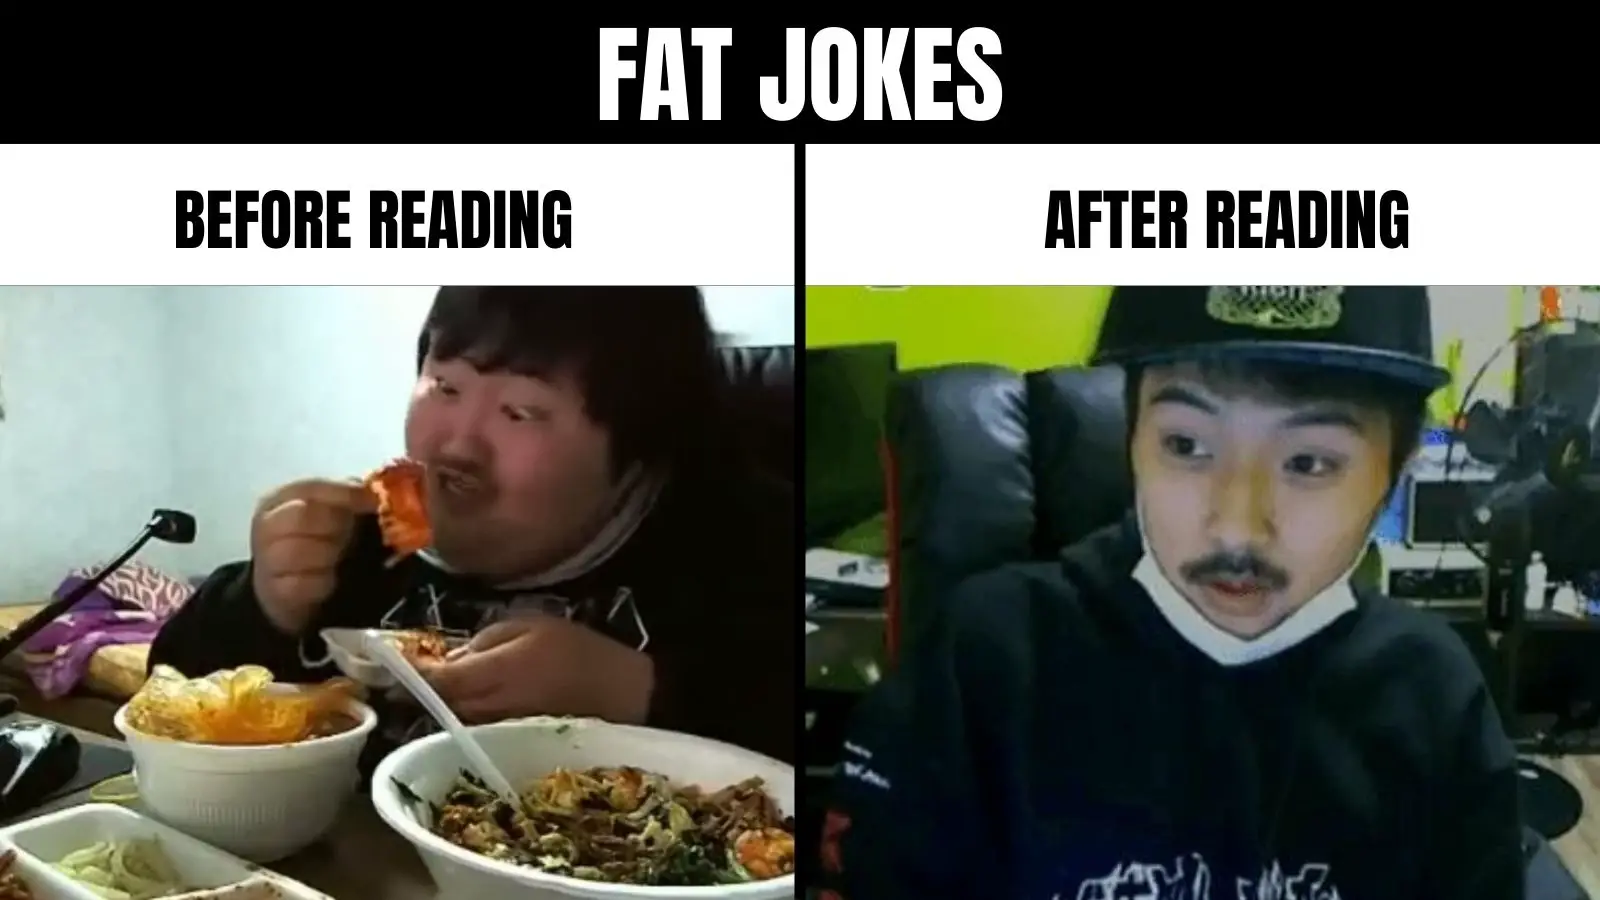 Funny Fat Jokes on Obesity